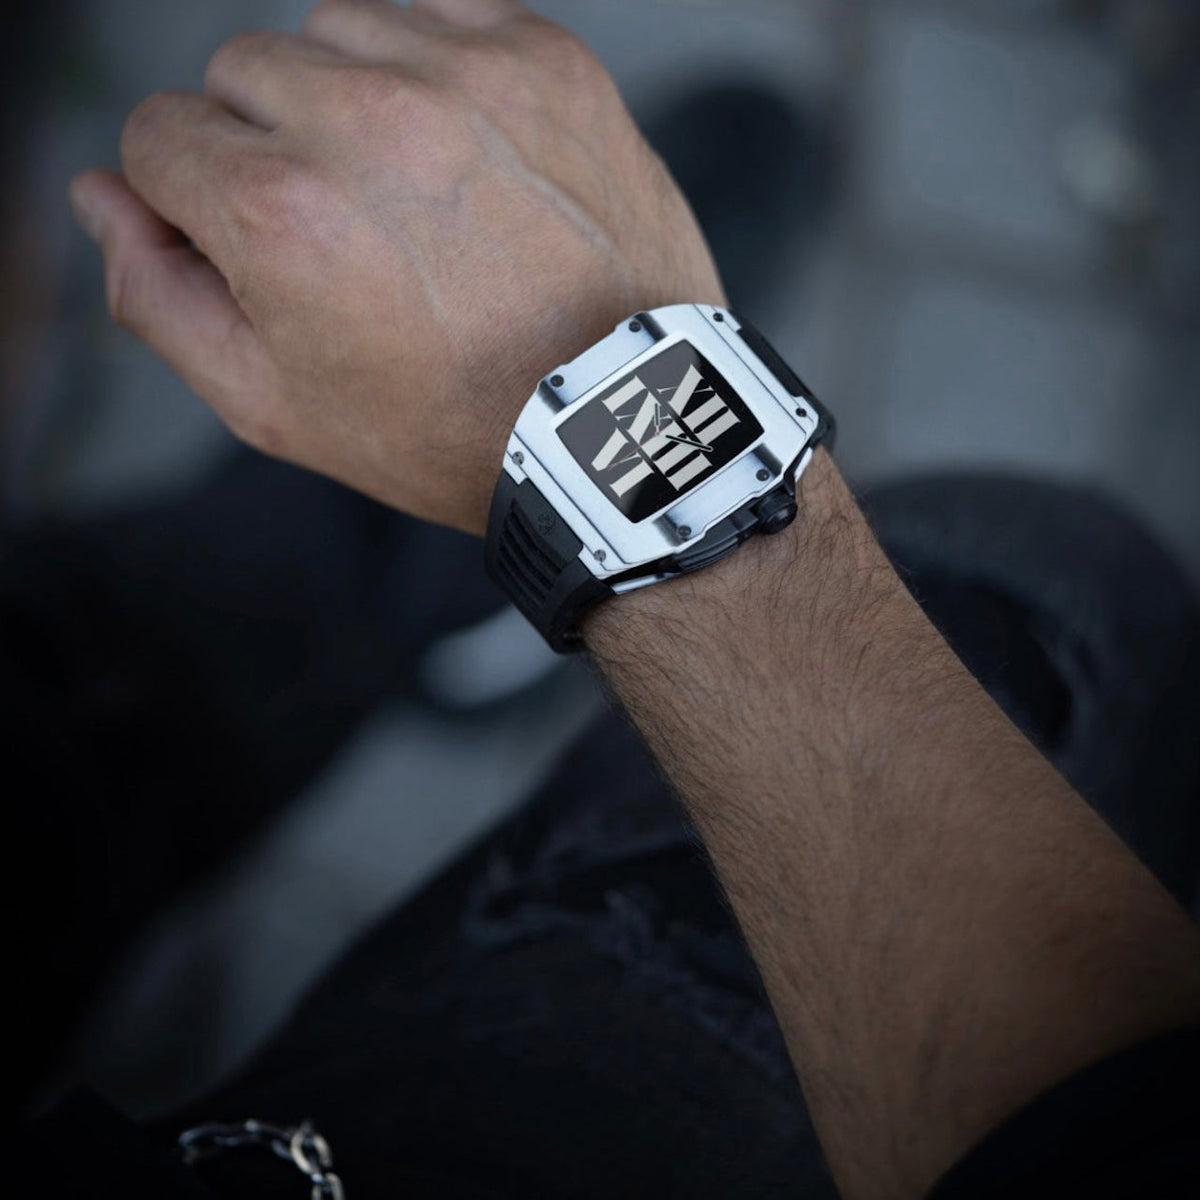 Apple Watch Case - RSC44 - ALBINO WHITE/BLK